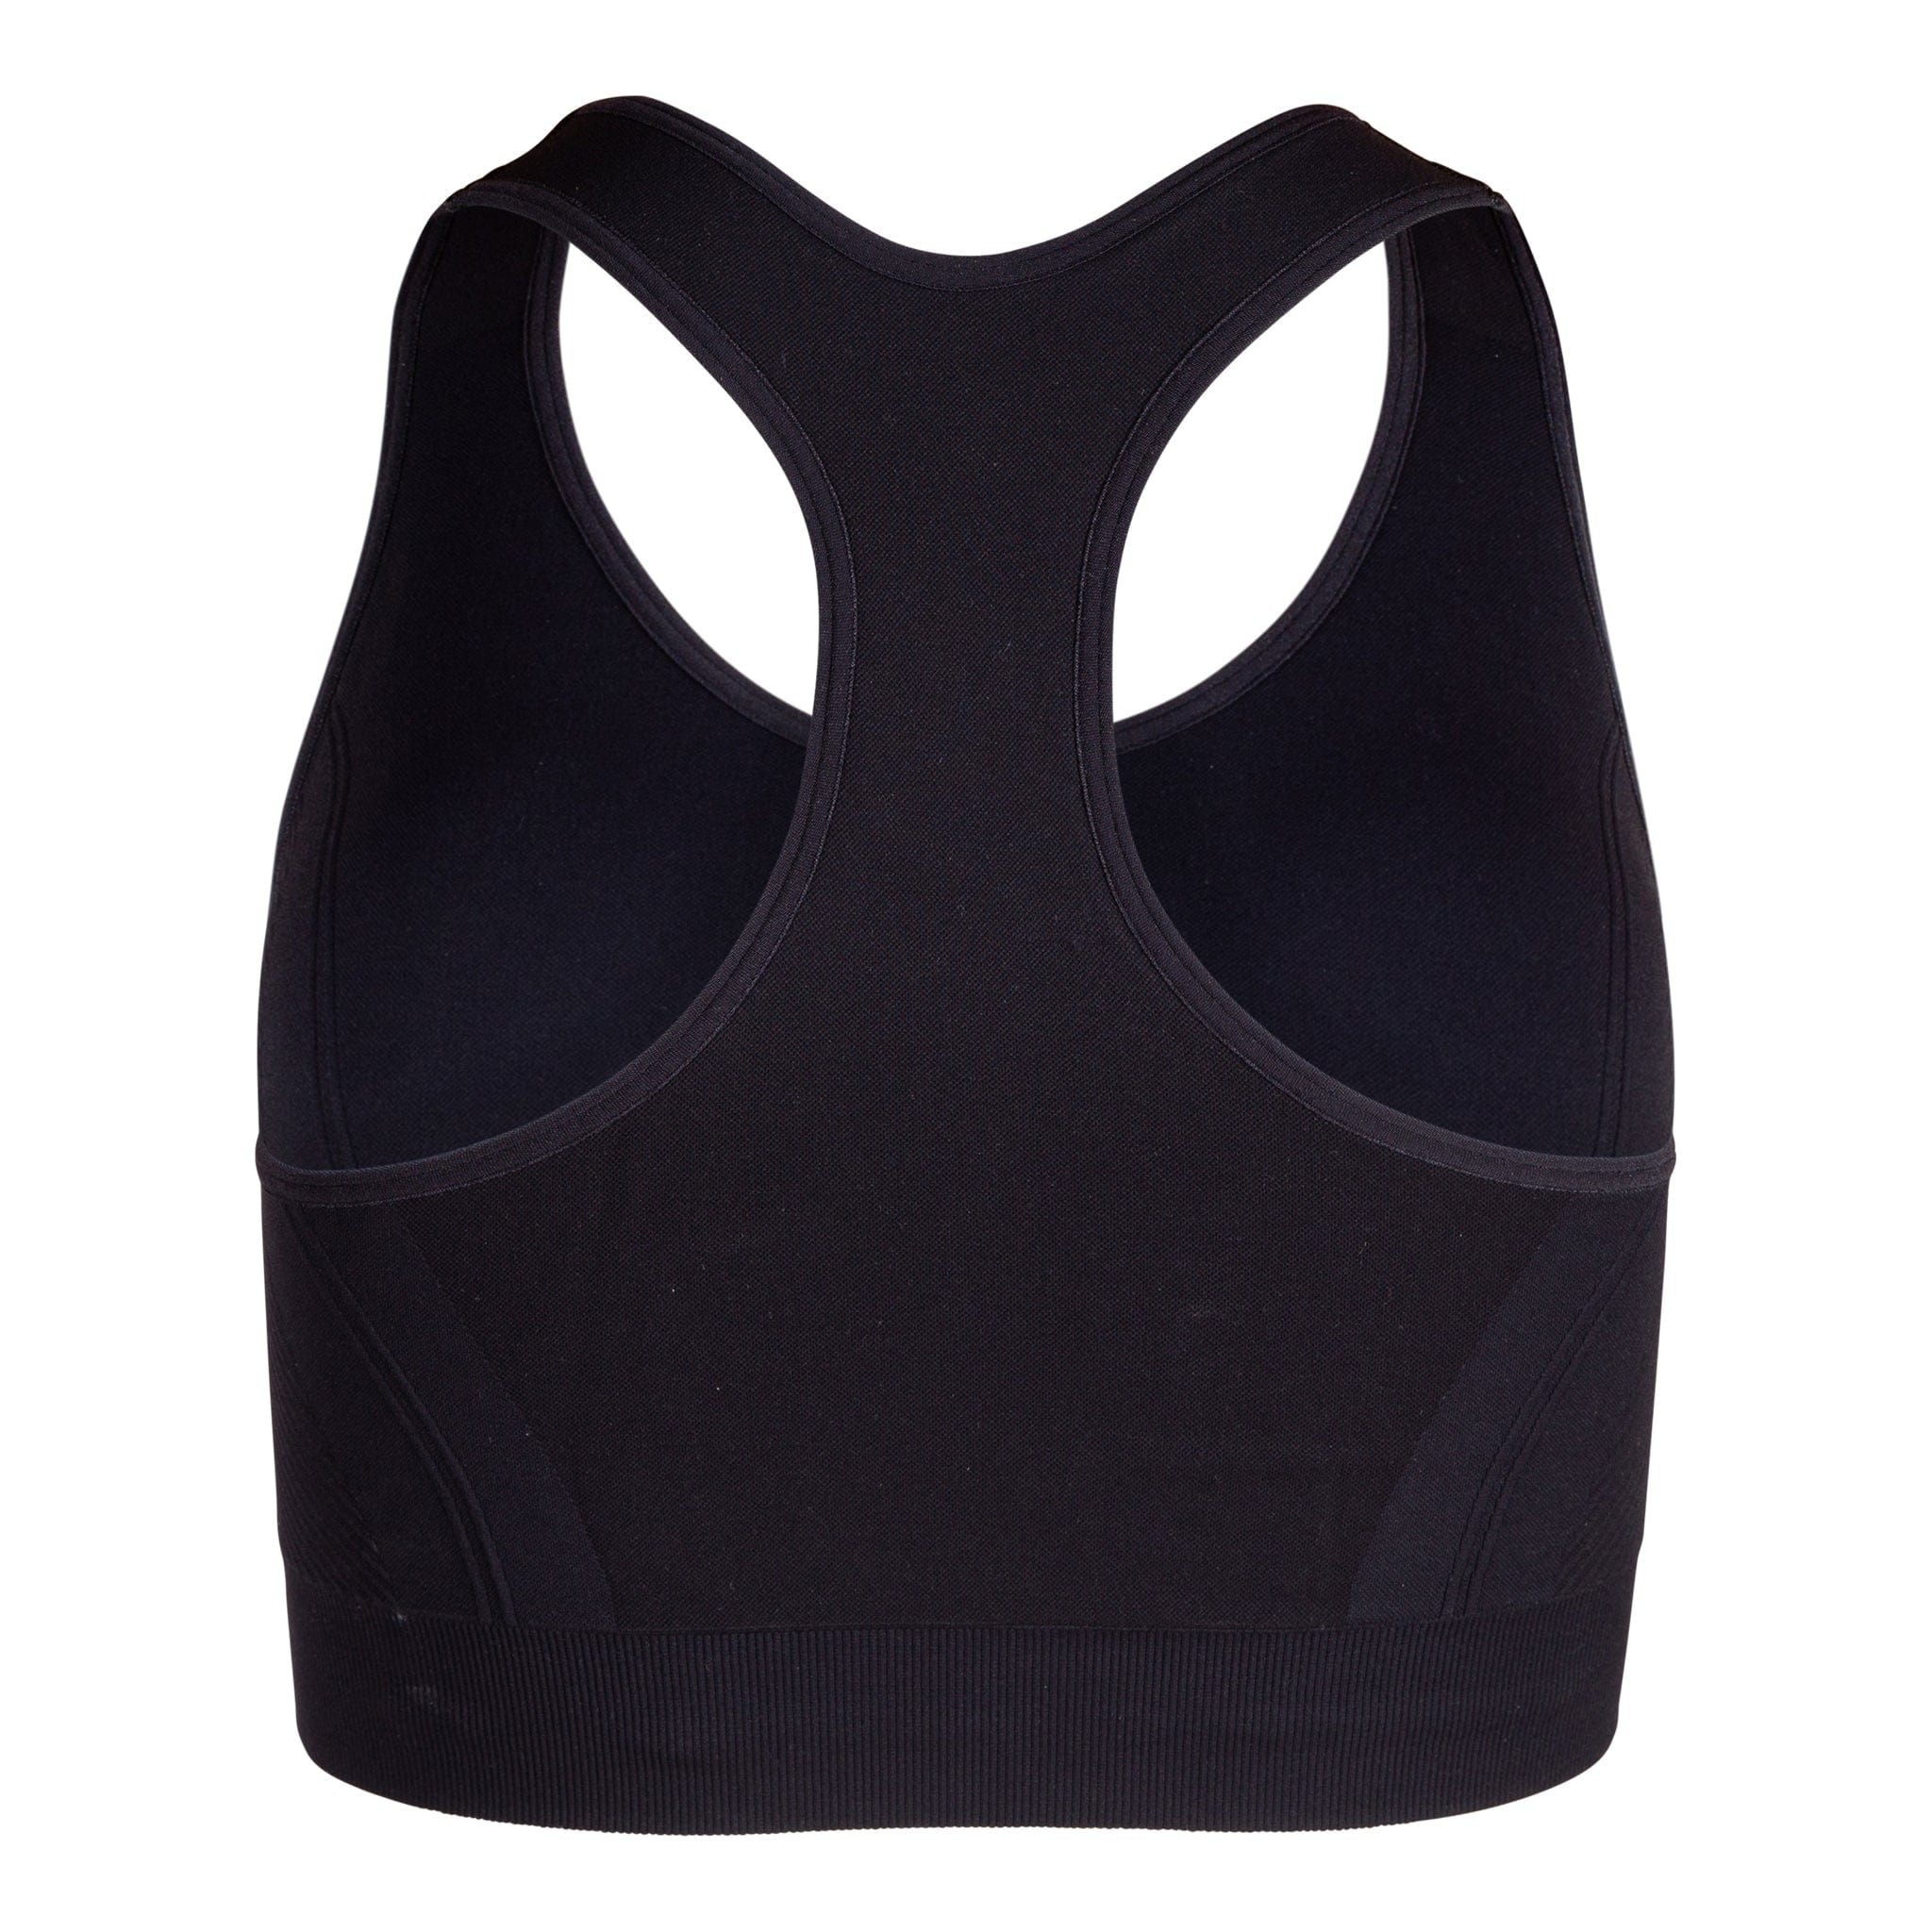 BRA - grey merino jersey 140 gr sports bra for woman, Rewoolution